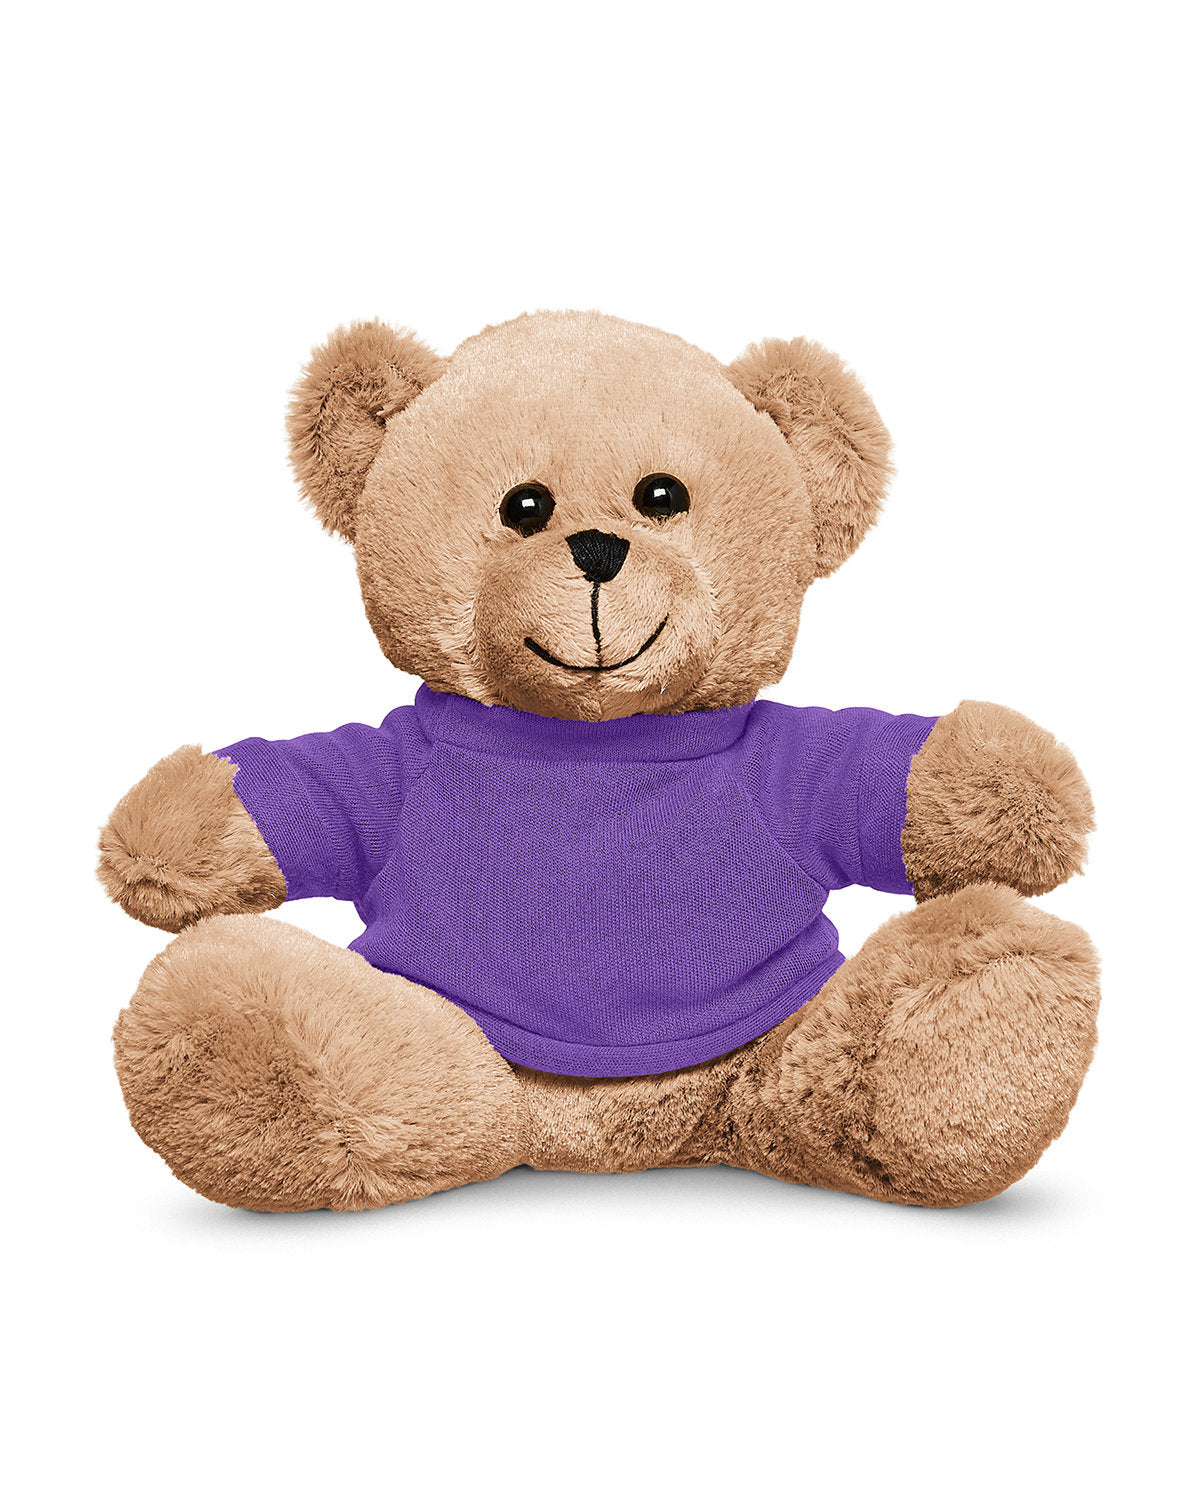 7" Plush Bear With T-Shirt